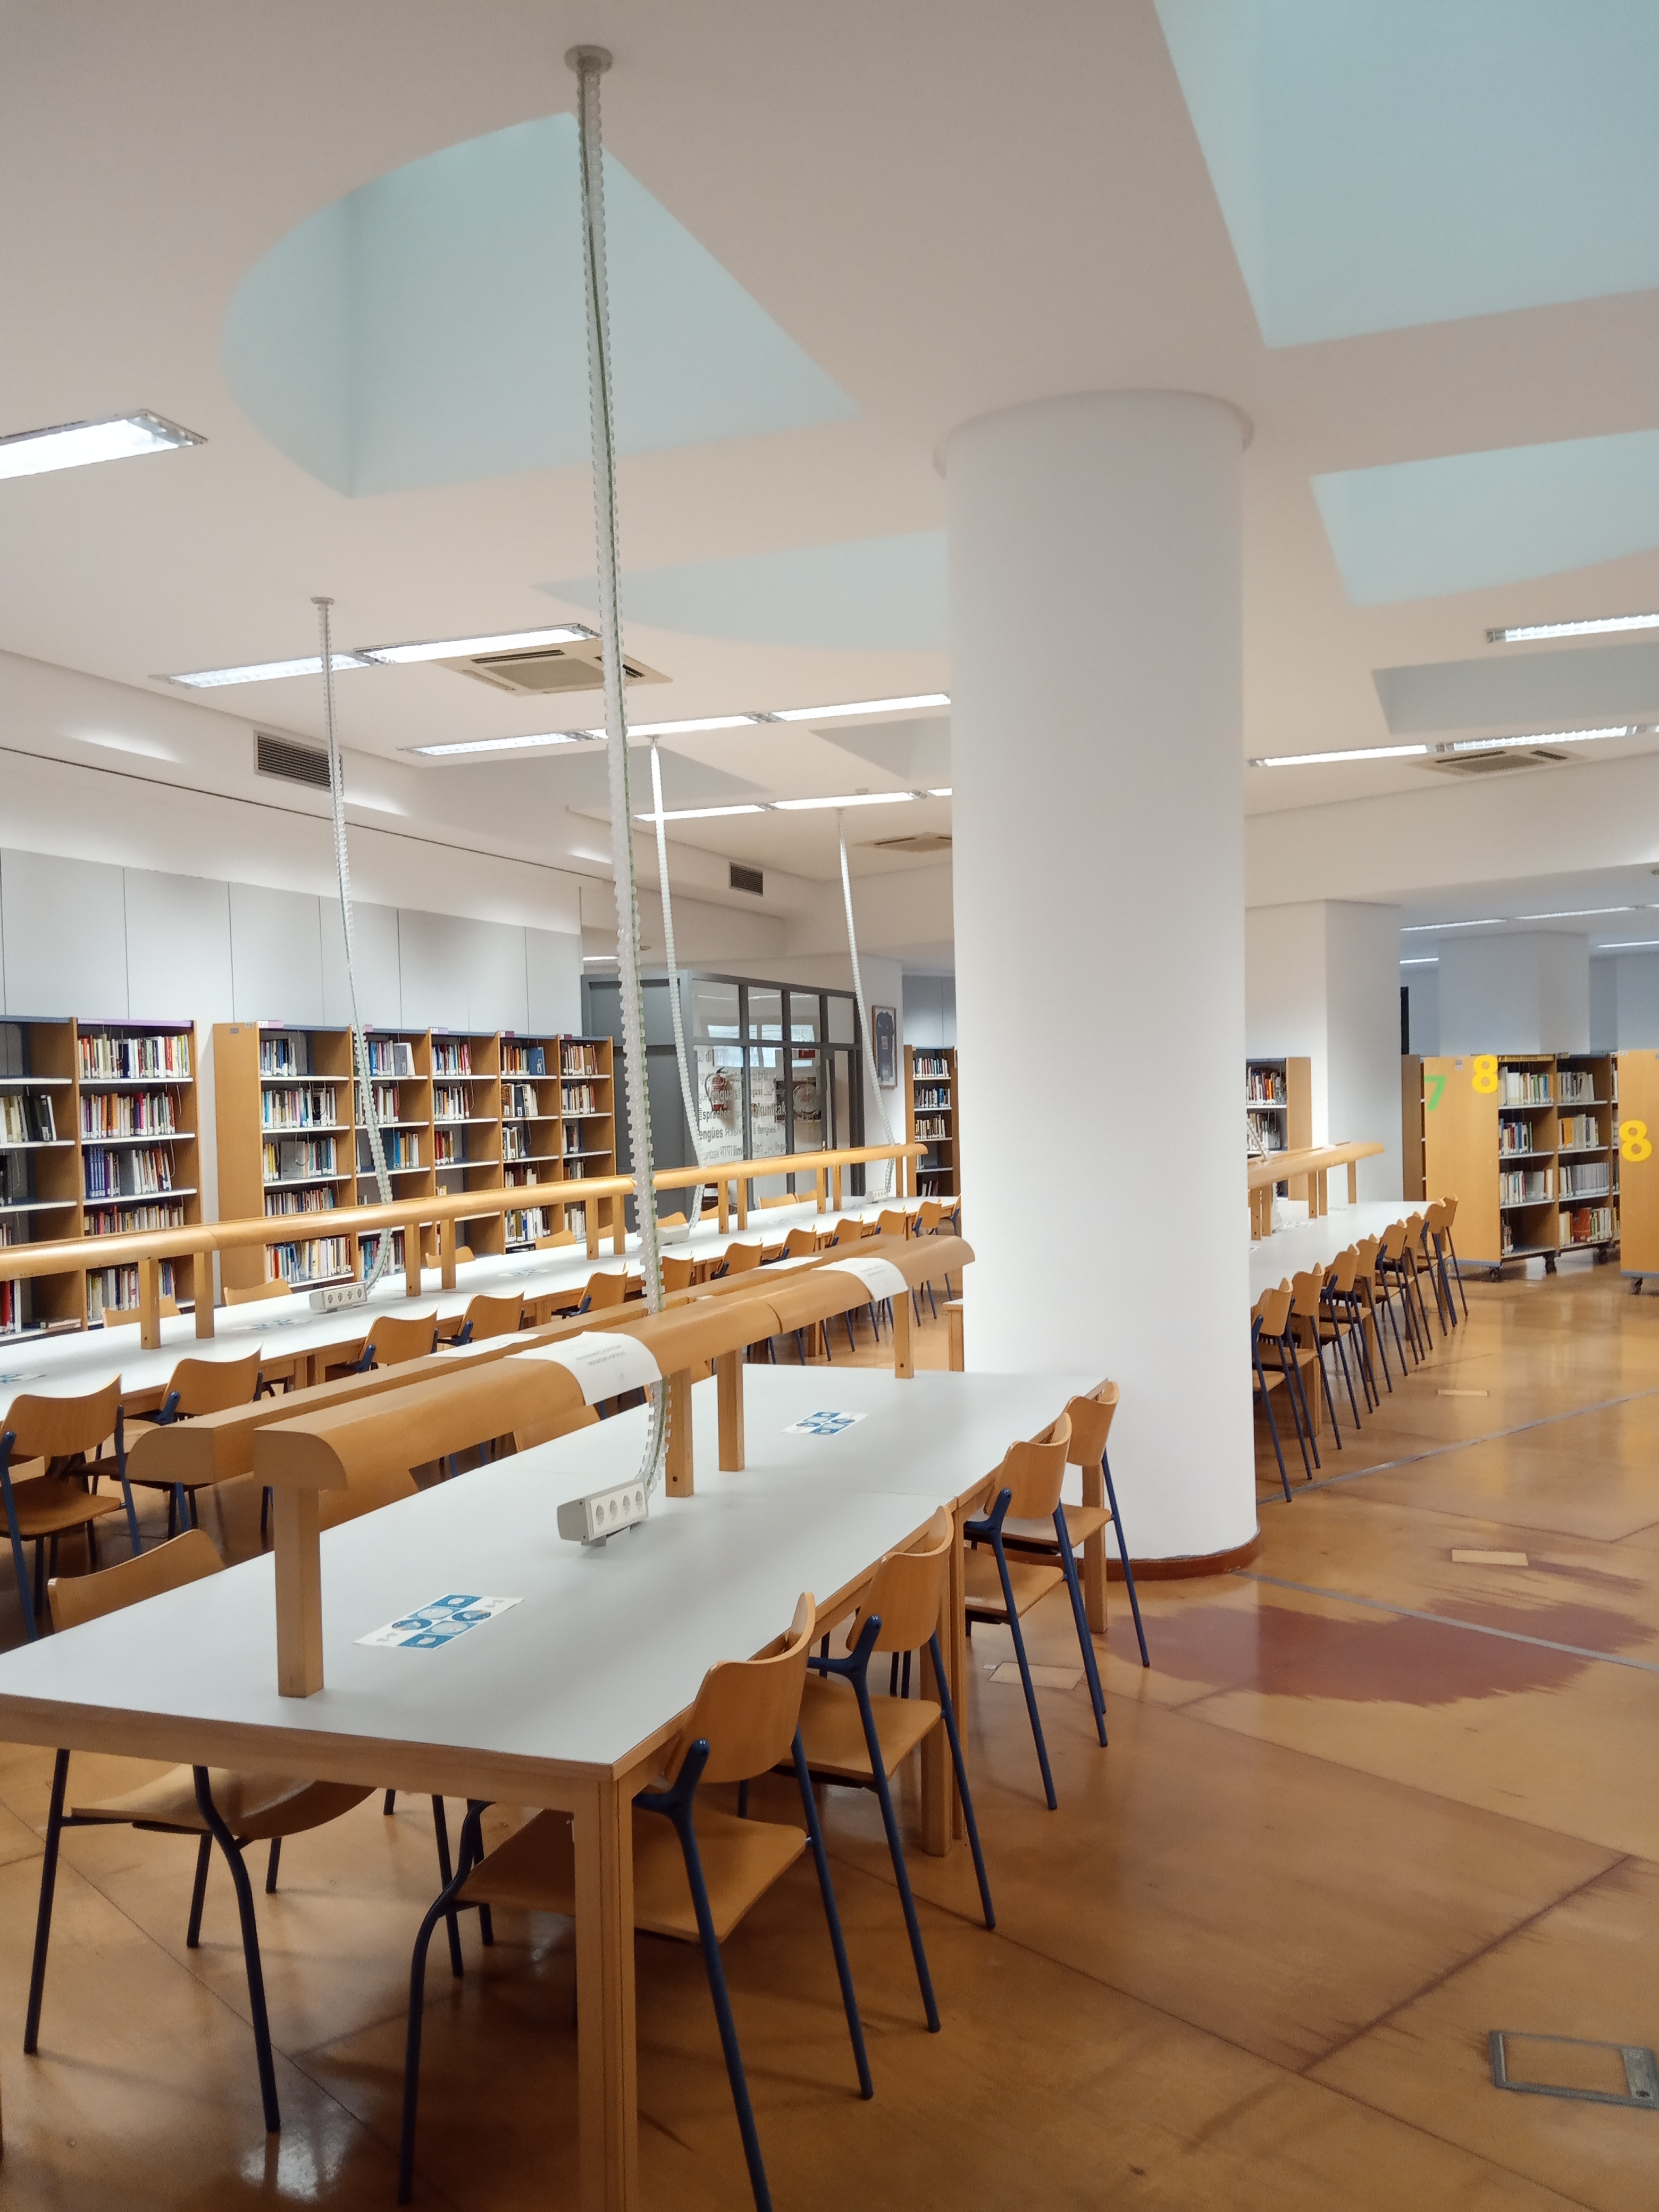 La biblioteca municipal abrirá en breve